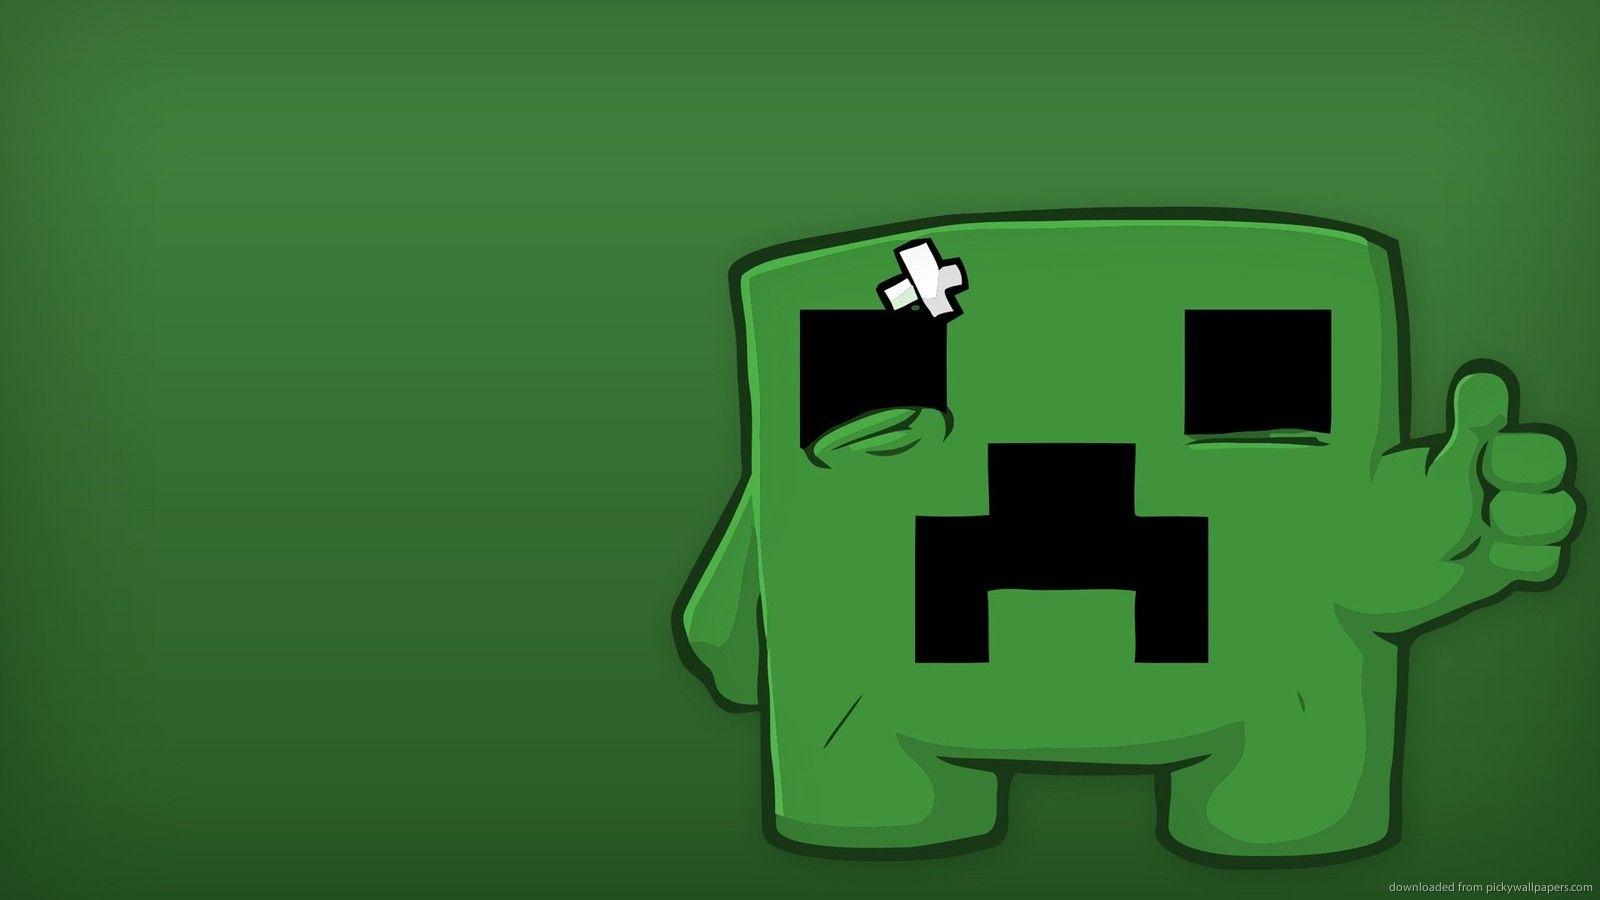 Minecraft Creeper Image Click Wallpaper. Gamers